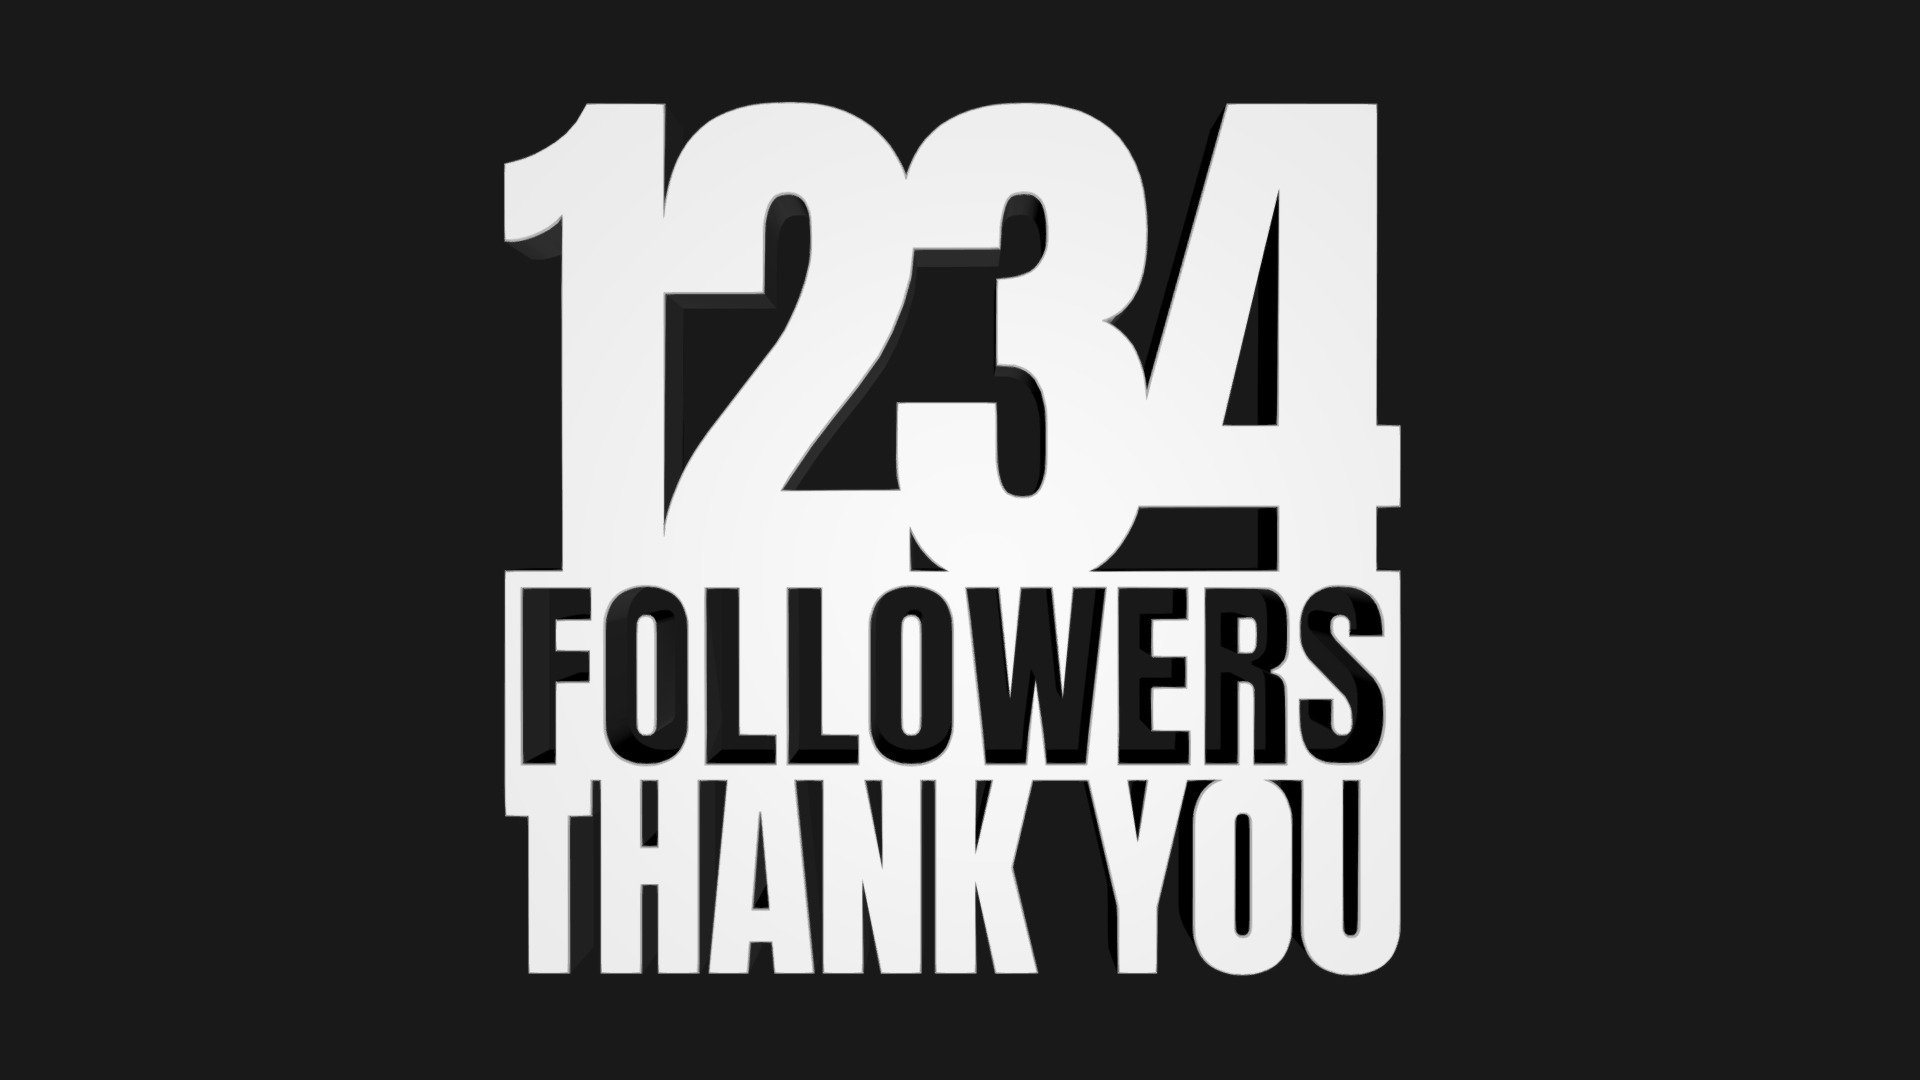 1234 Followers. Thank You!